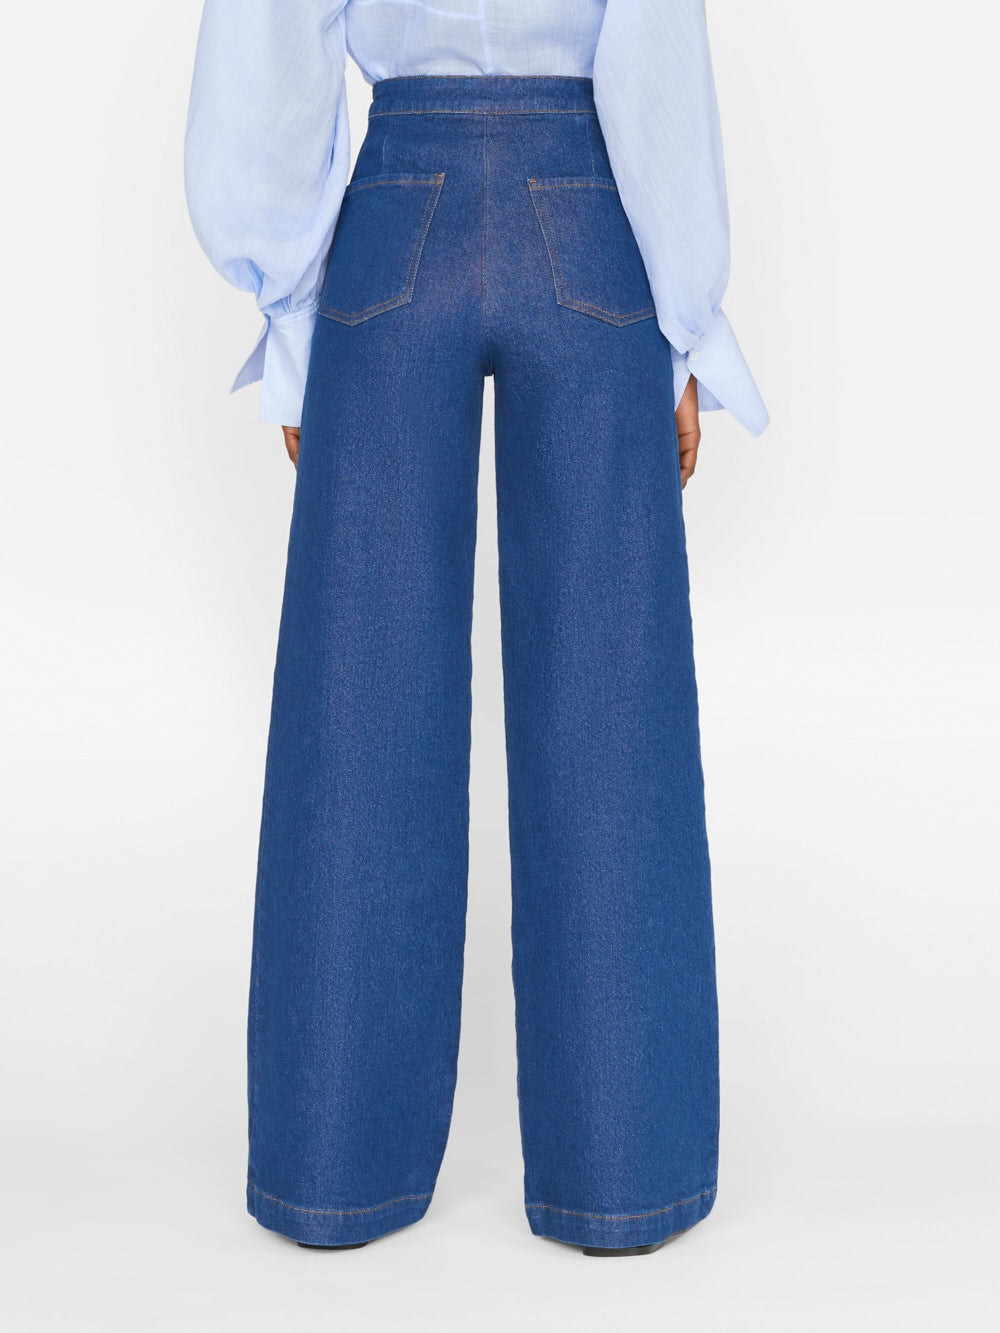 Zara Sailor Blue Jeans Size 2